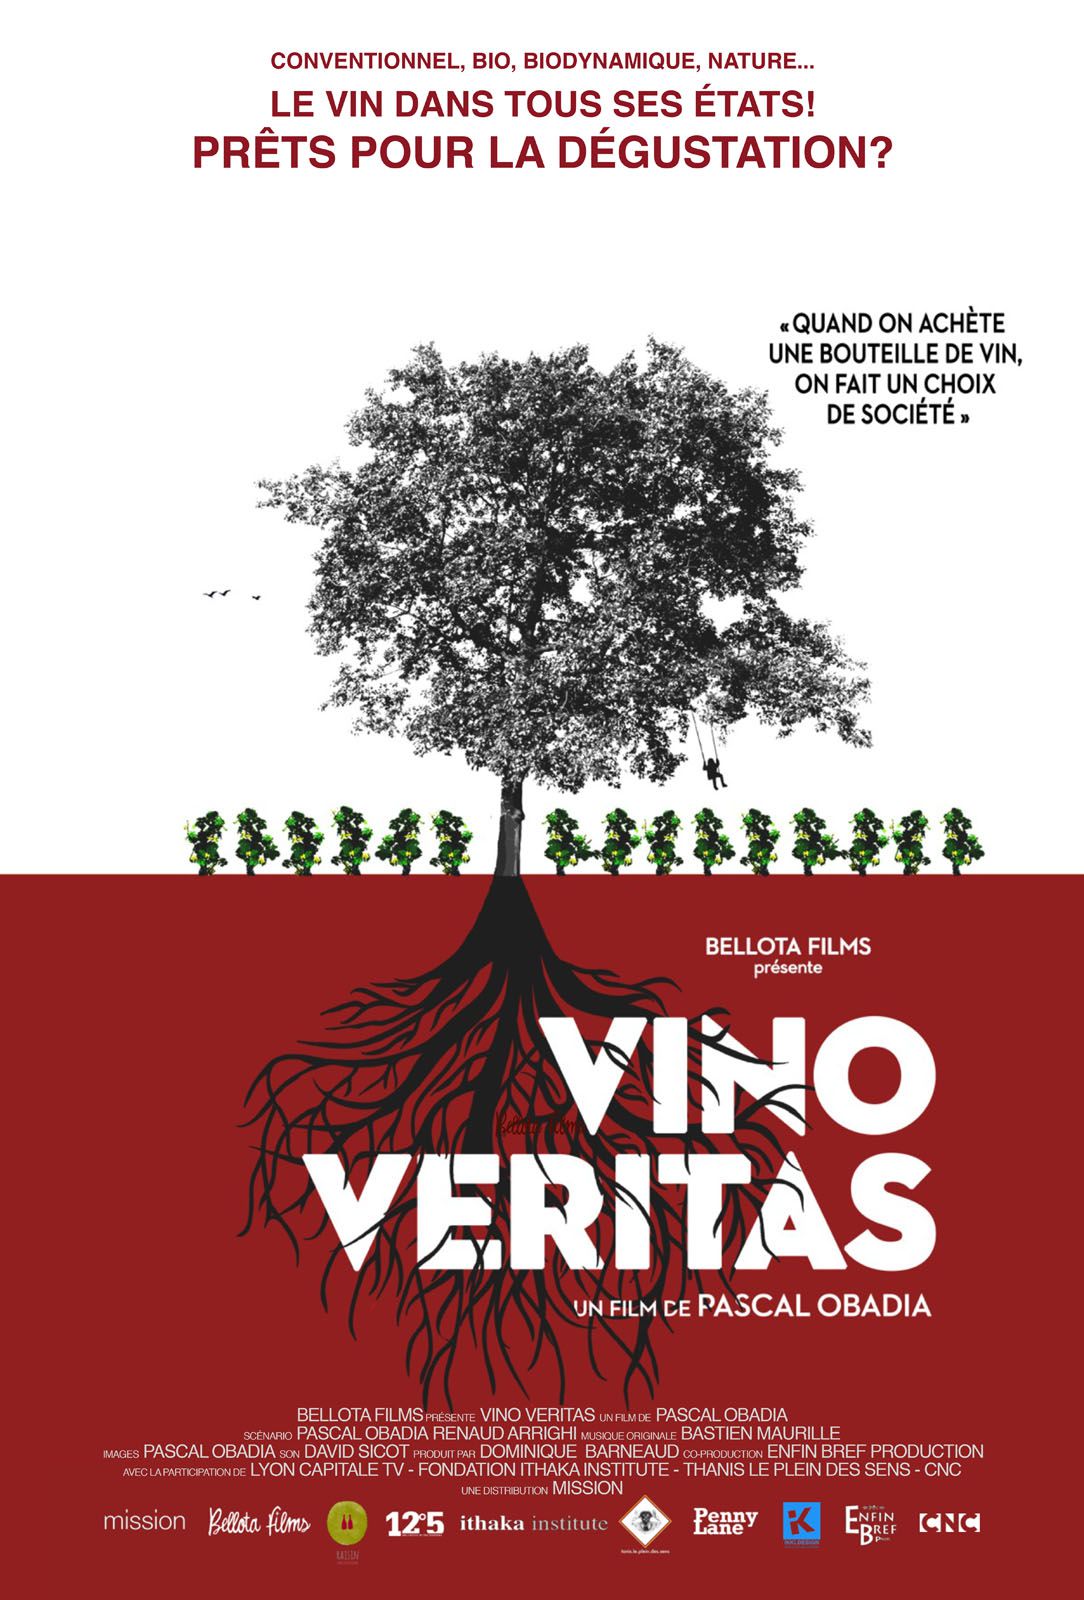 Vino Veritas - Documentaire (2016) streaming VF gratuit complet